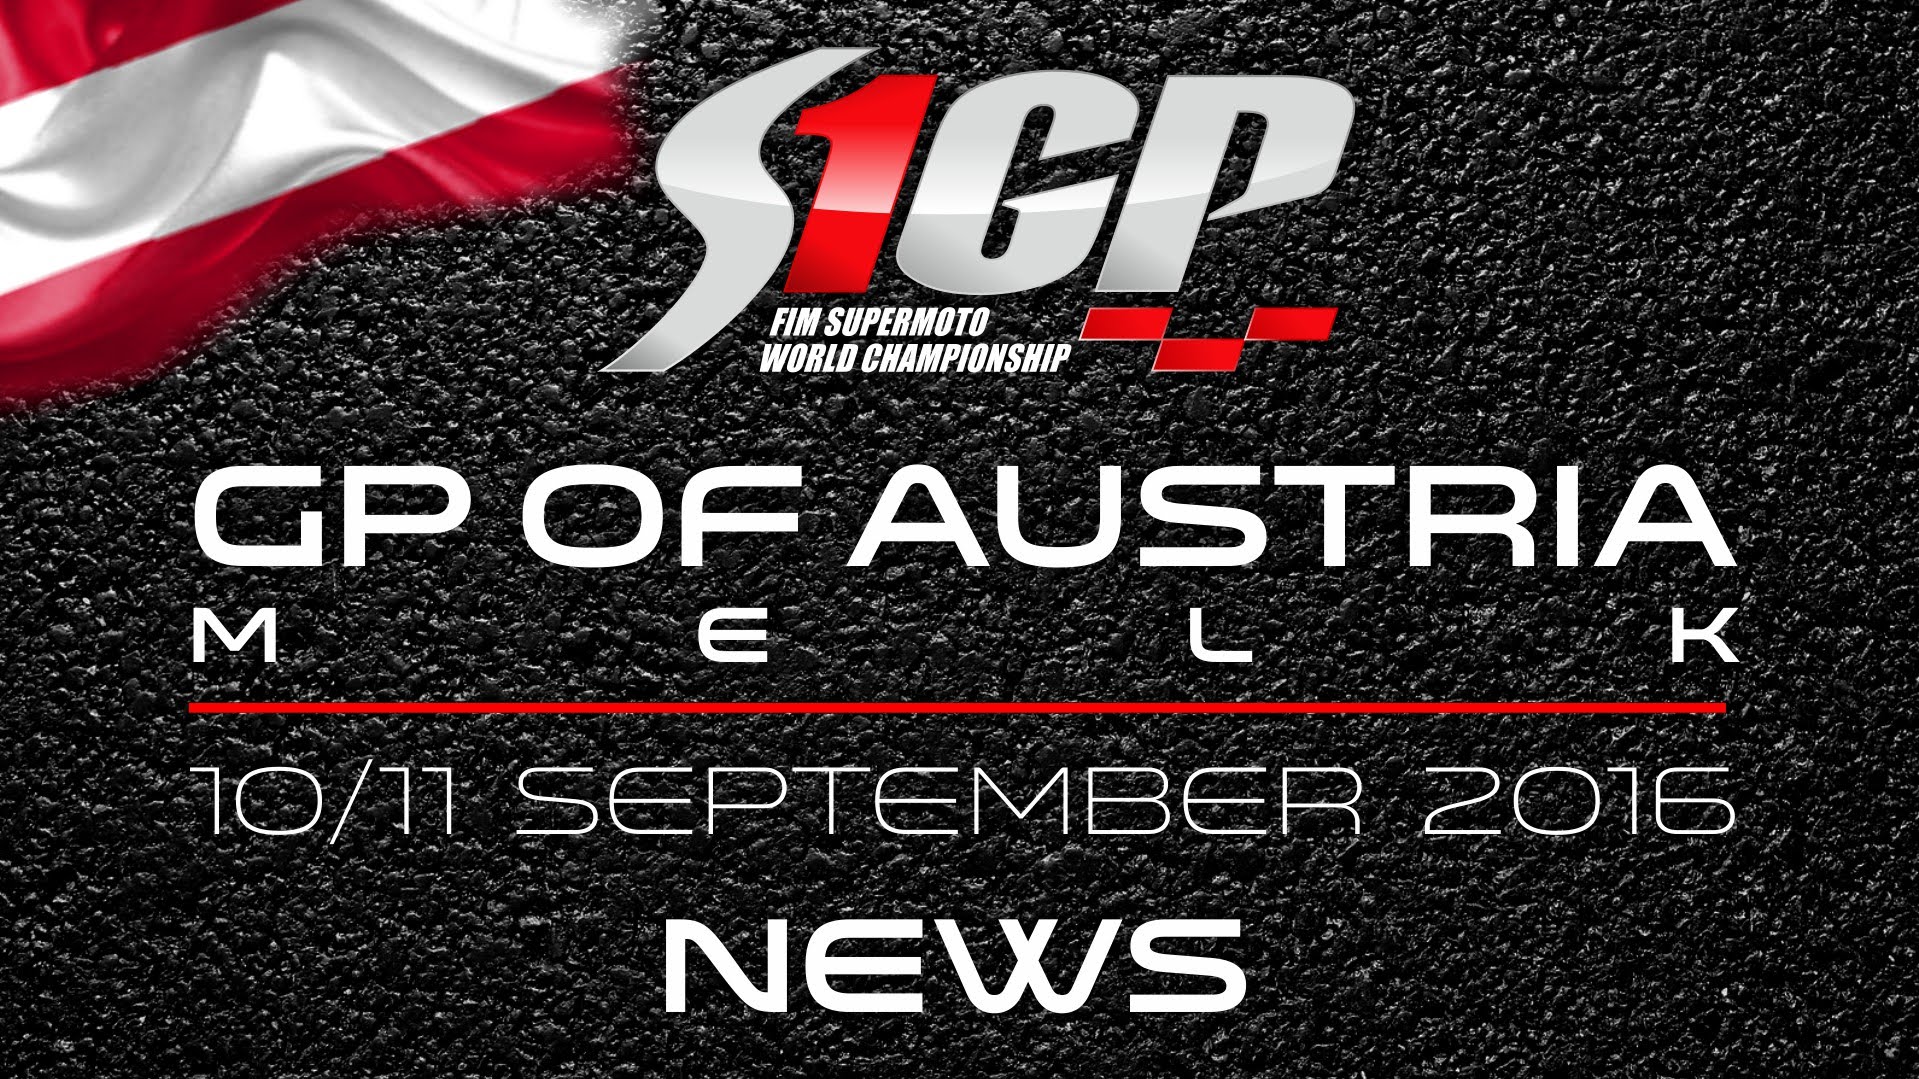 VIDEO: S1GP 2016 – ROUND 5: GP of AUSTRIA, Melk – News Highlights (5mn) – Supermoto